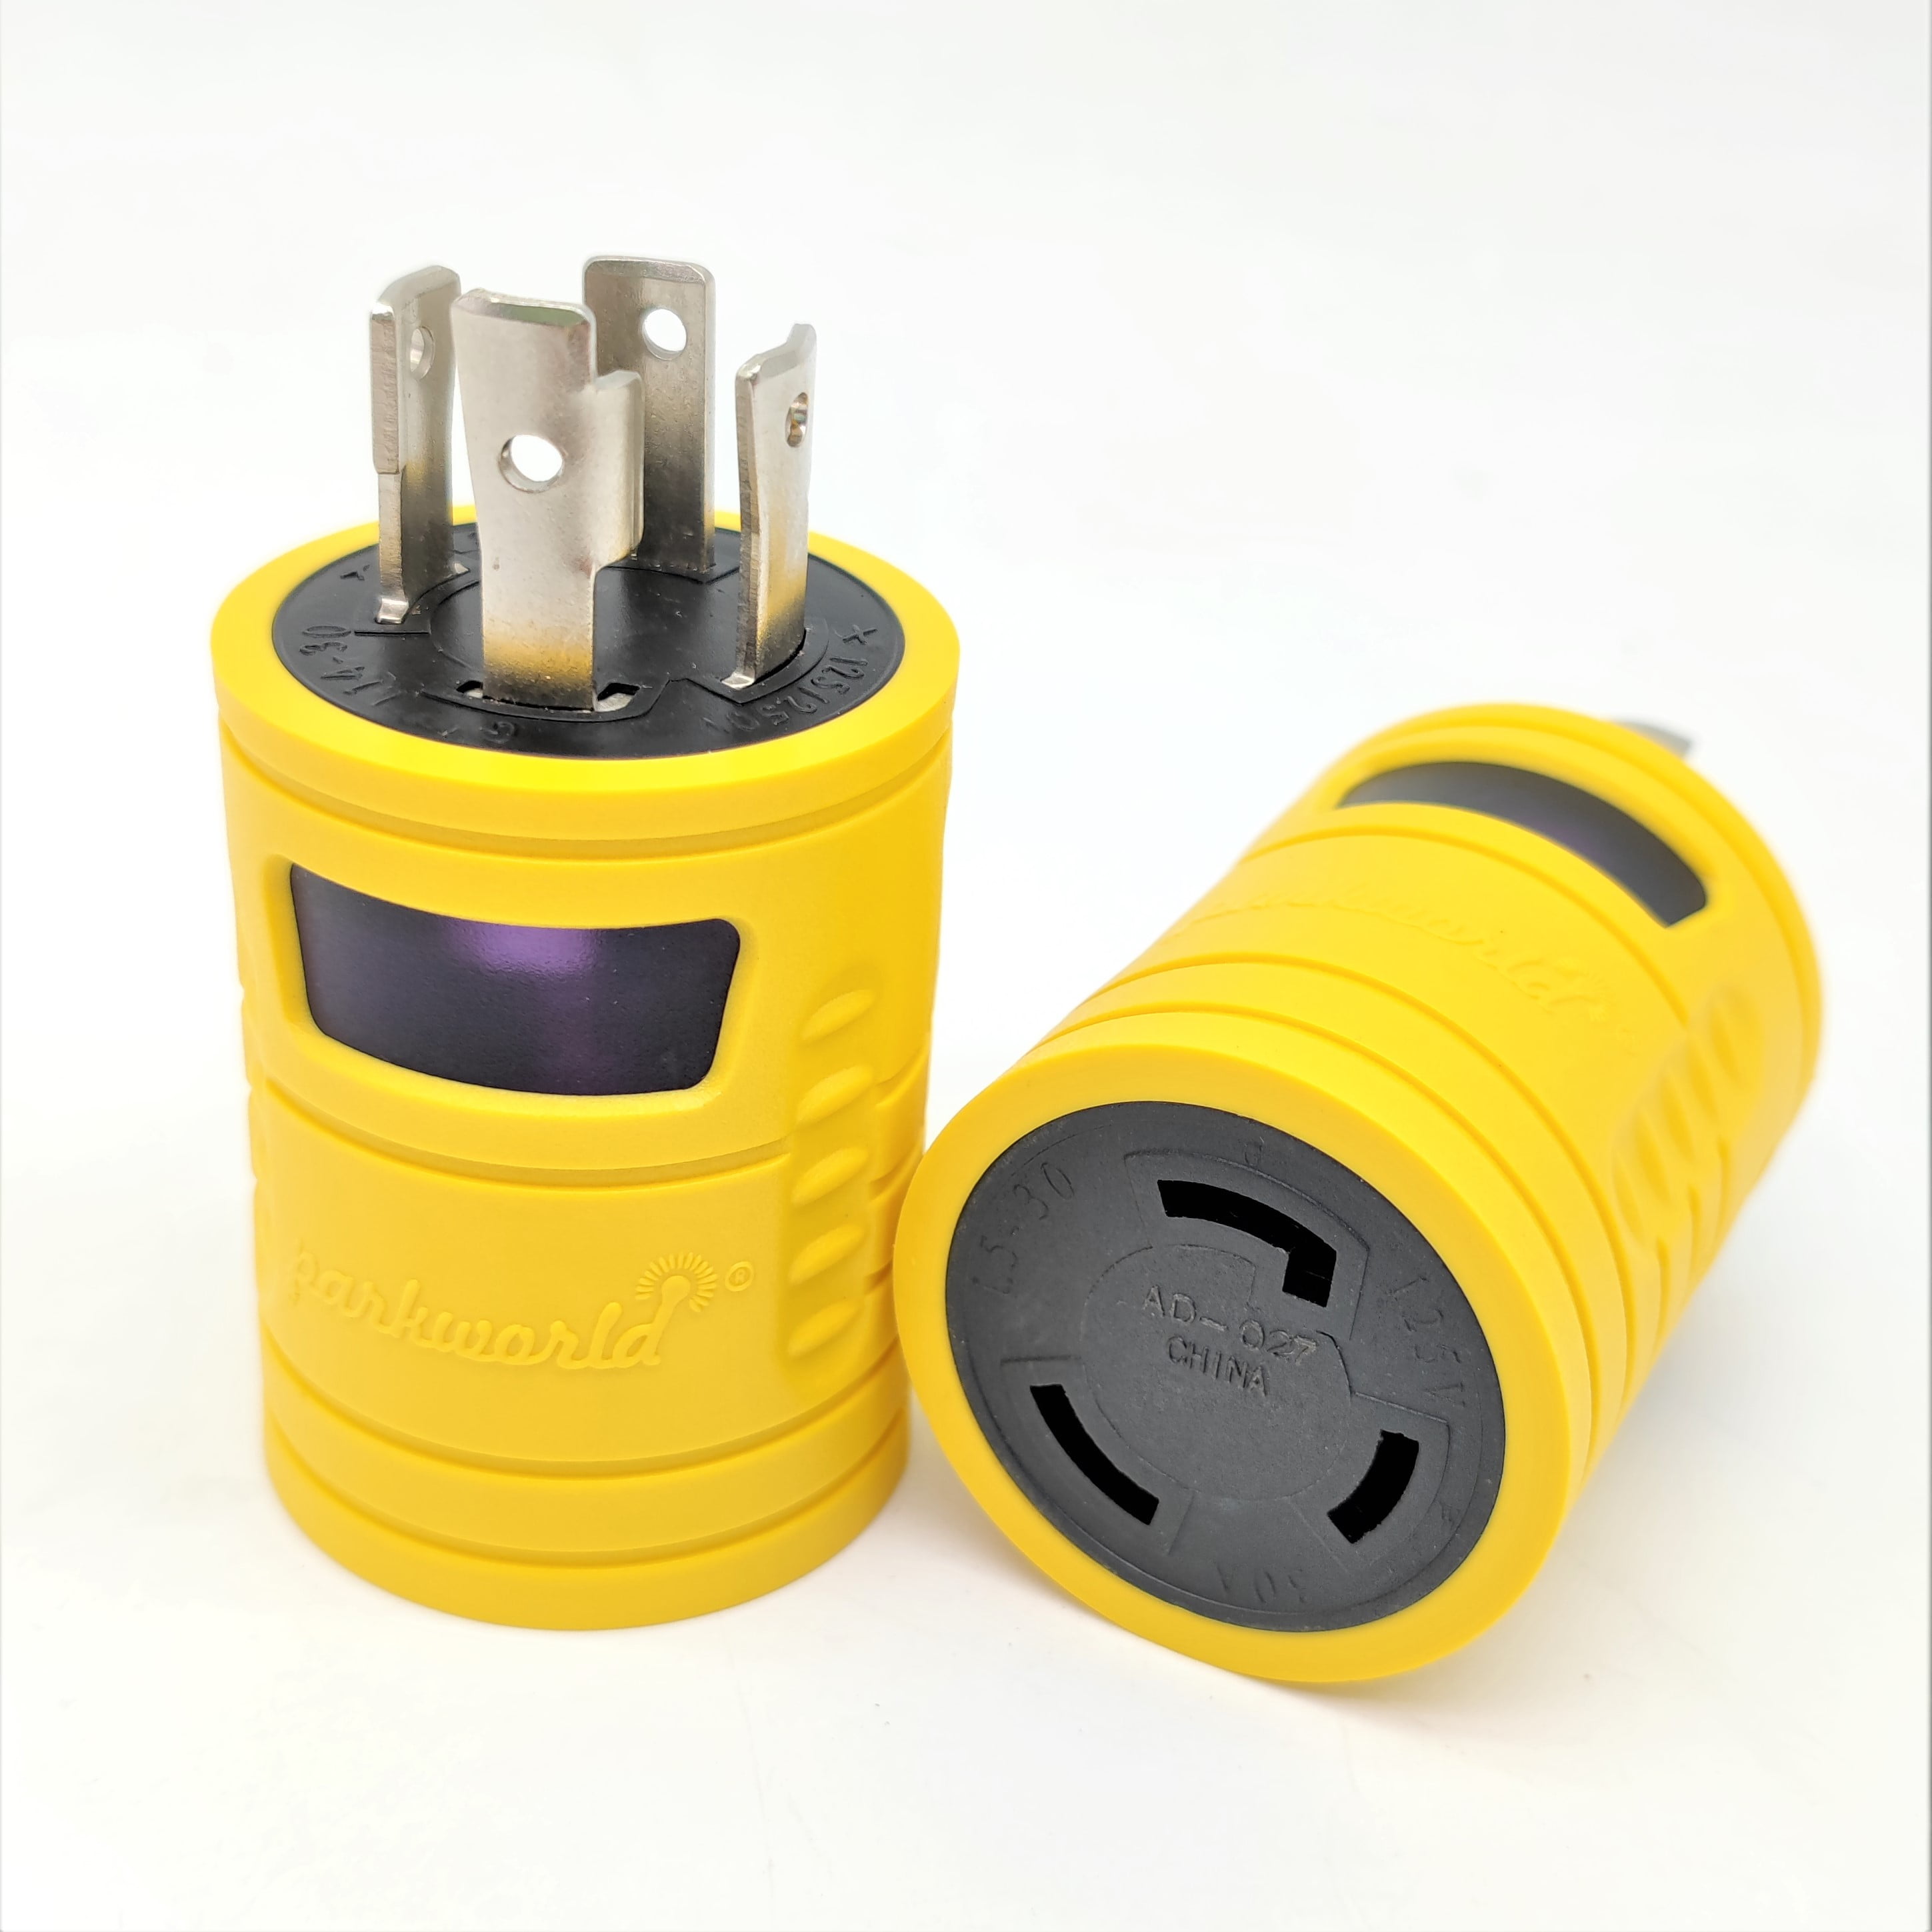 Generator adapter L5-30 P male to L14-30 R female twist lock 120 voltage adapter